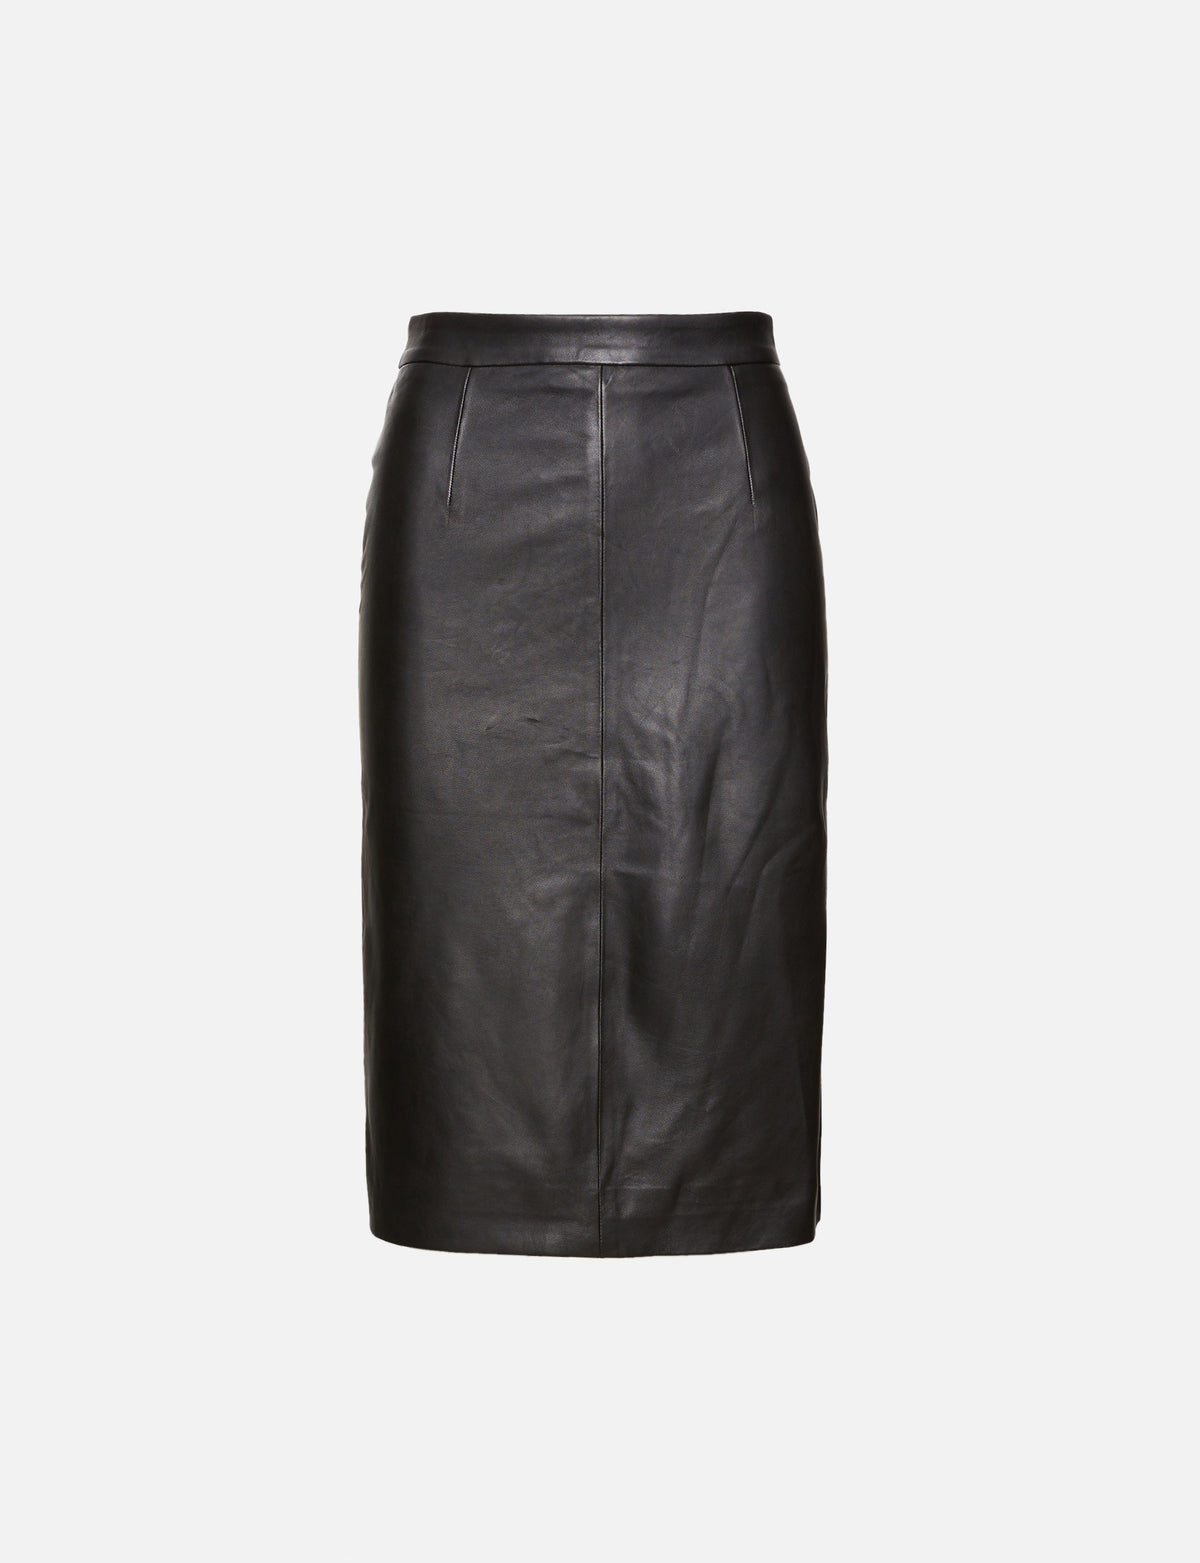 view 1 - Leonie Leather Skirt